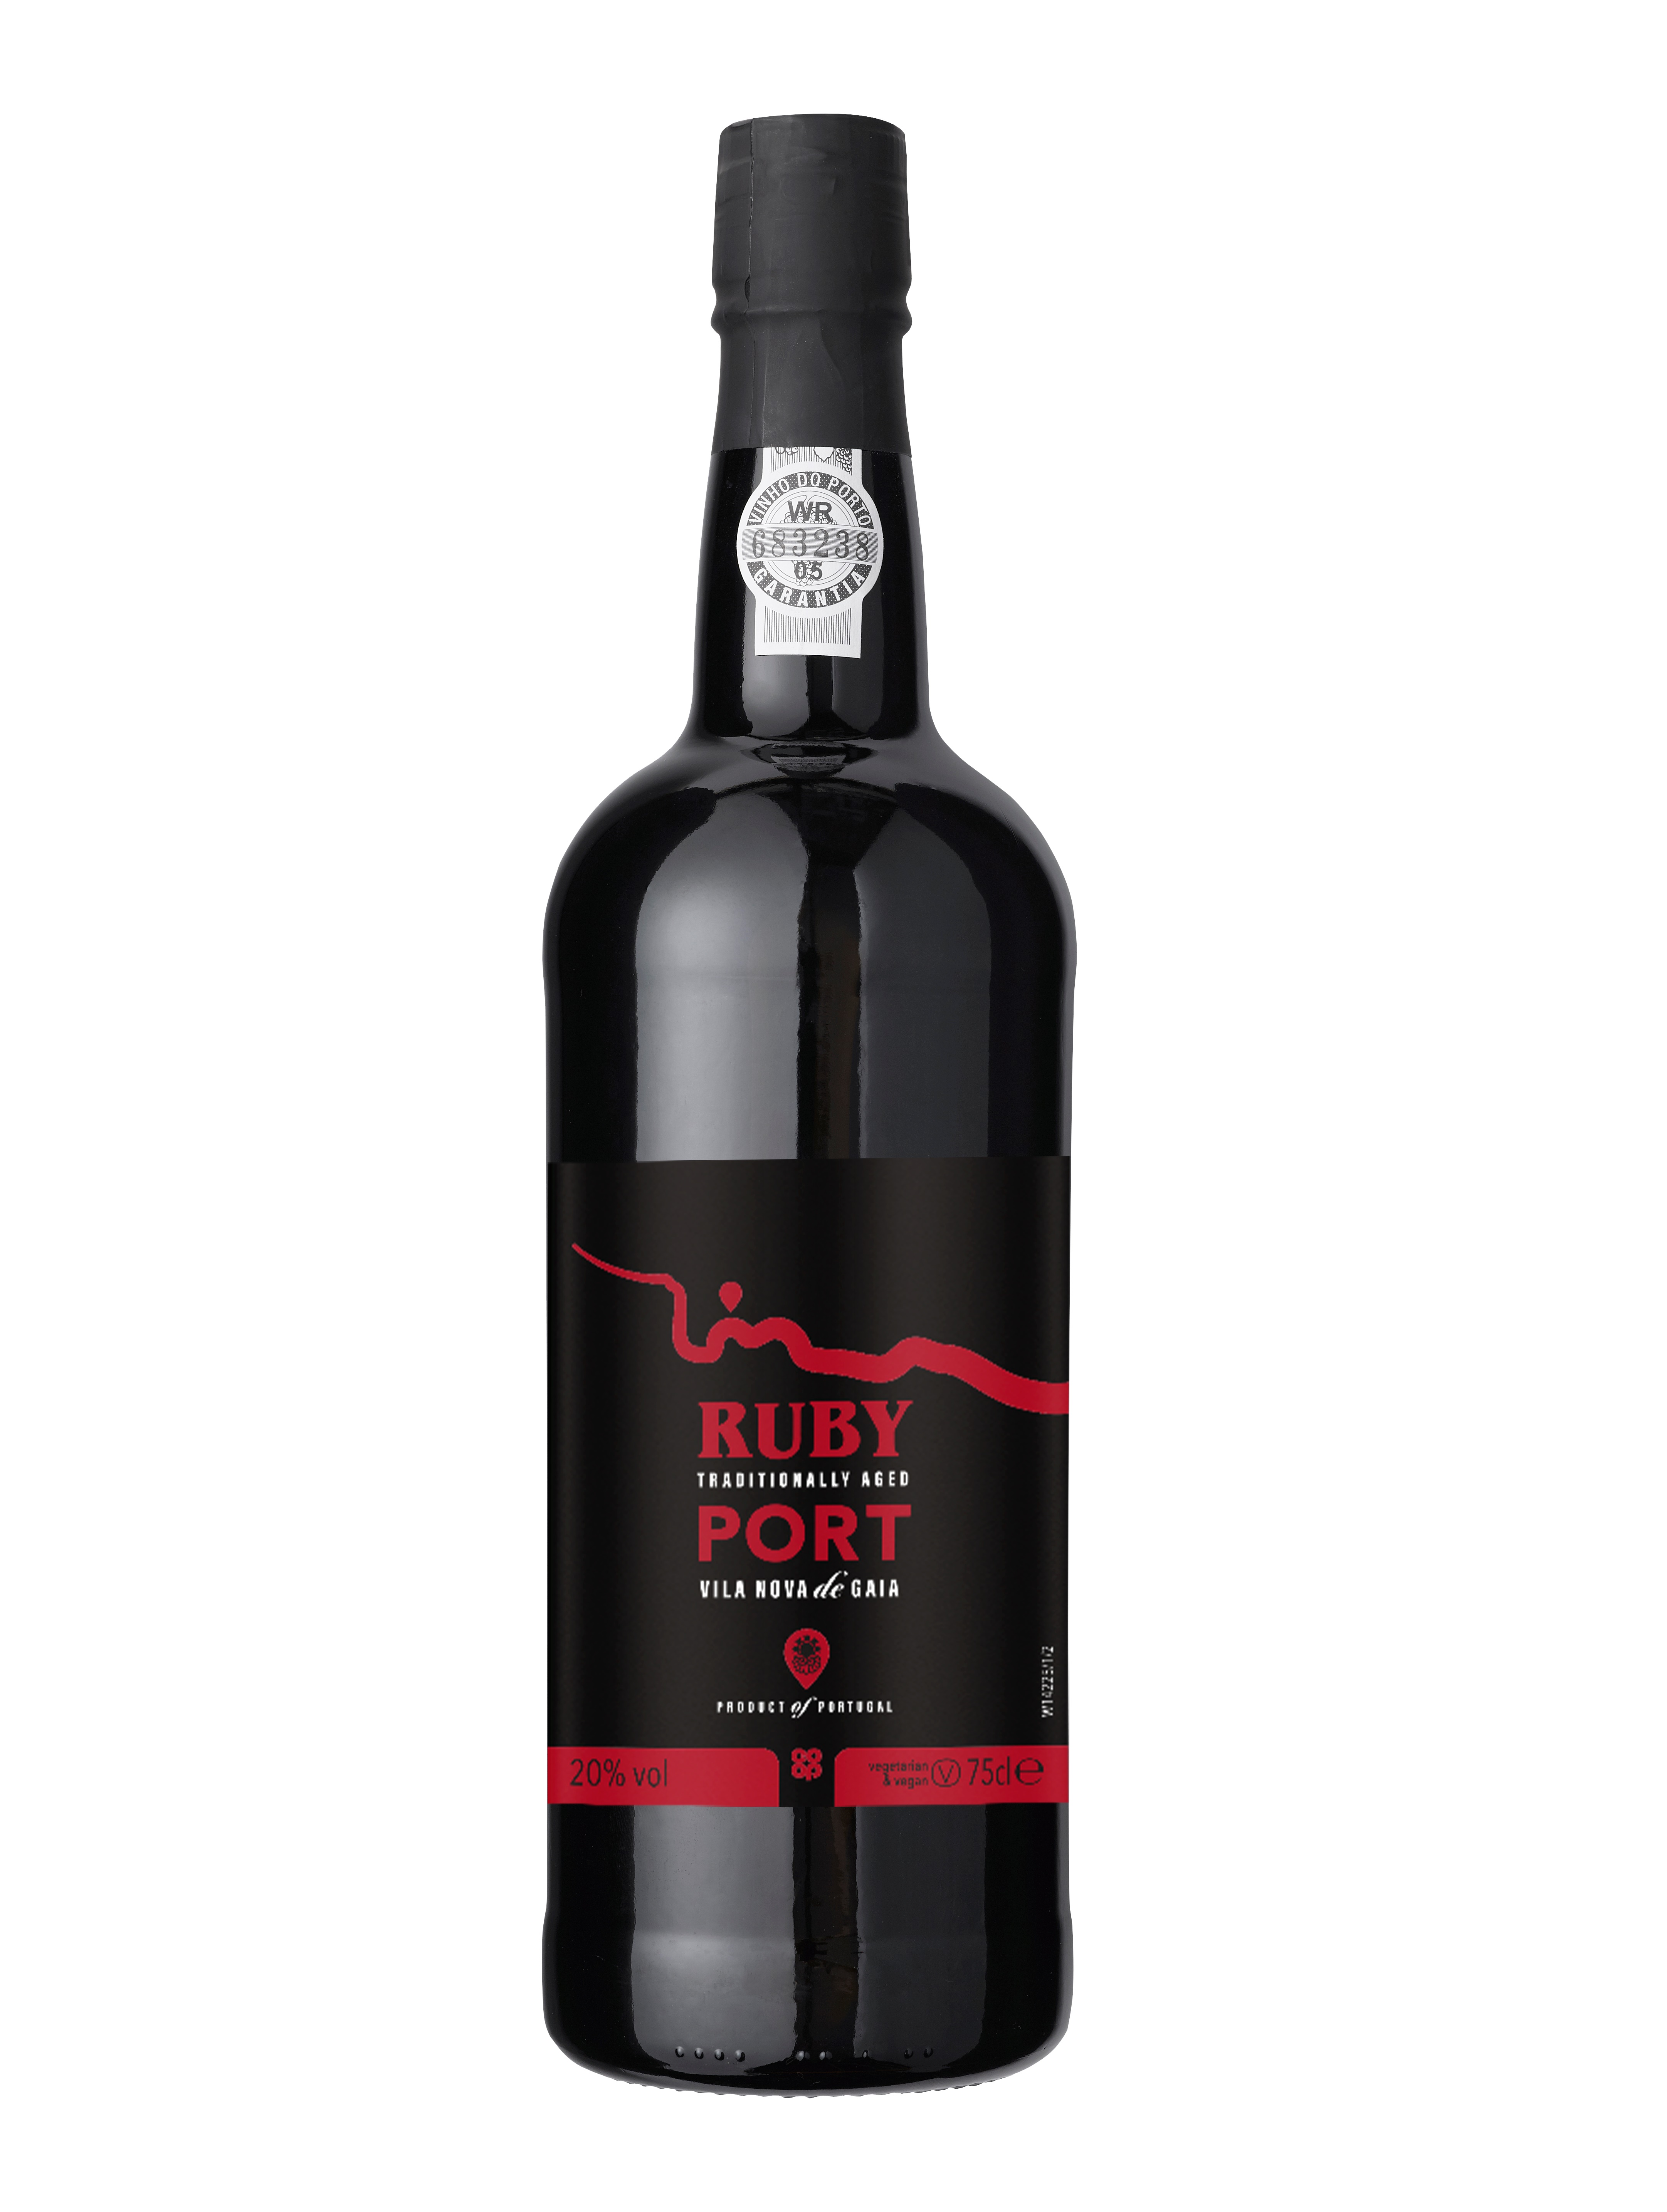 Руби порт. Kopke Fine Ruby Porto. Niepoort Ruby Porto. Wine Porto Fogo Ruby Port.